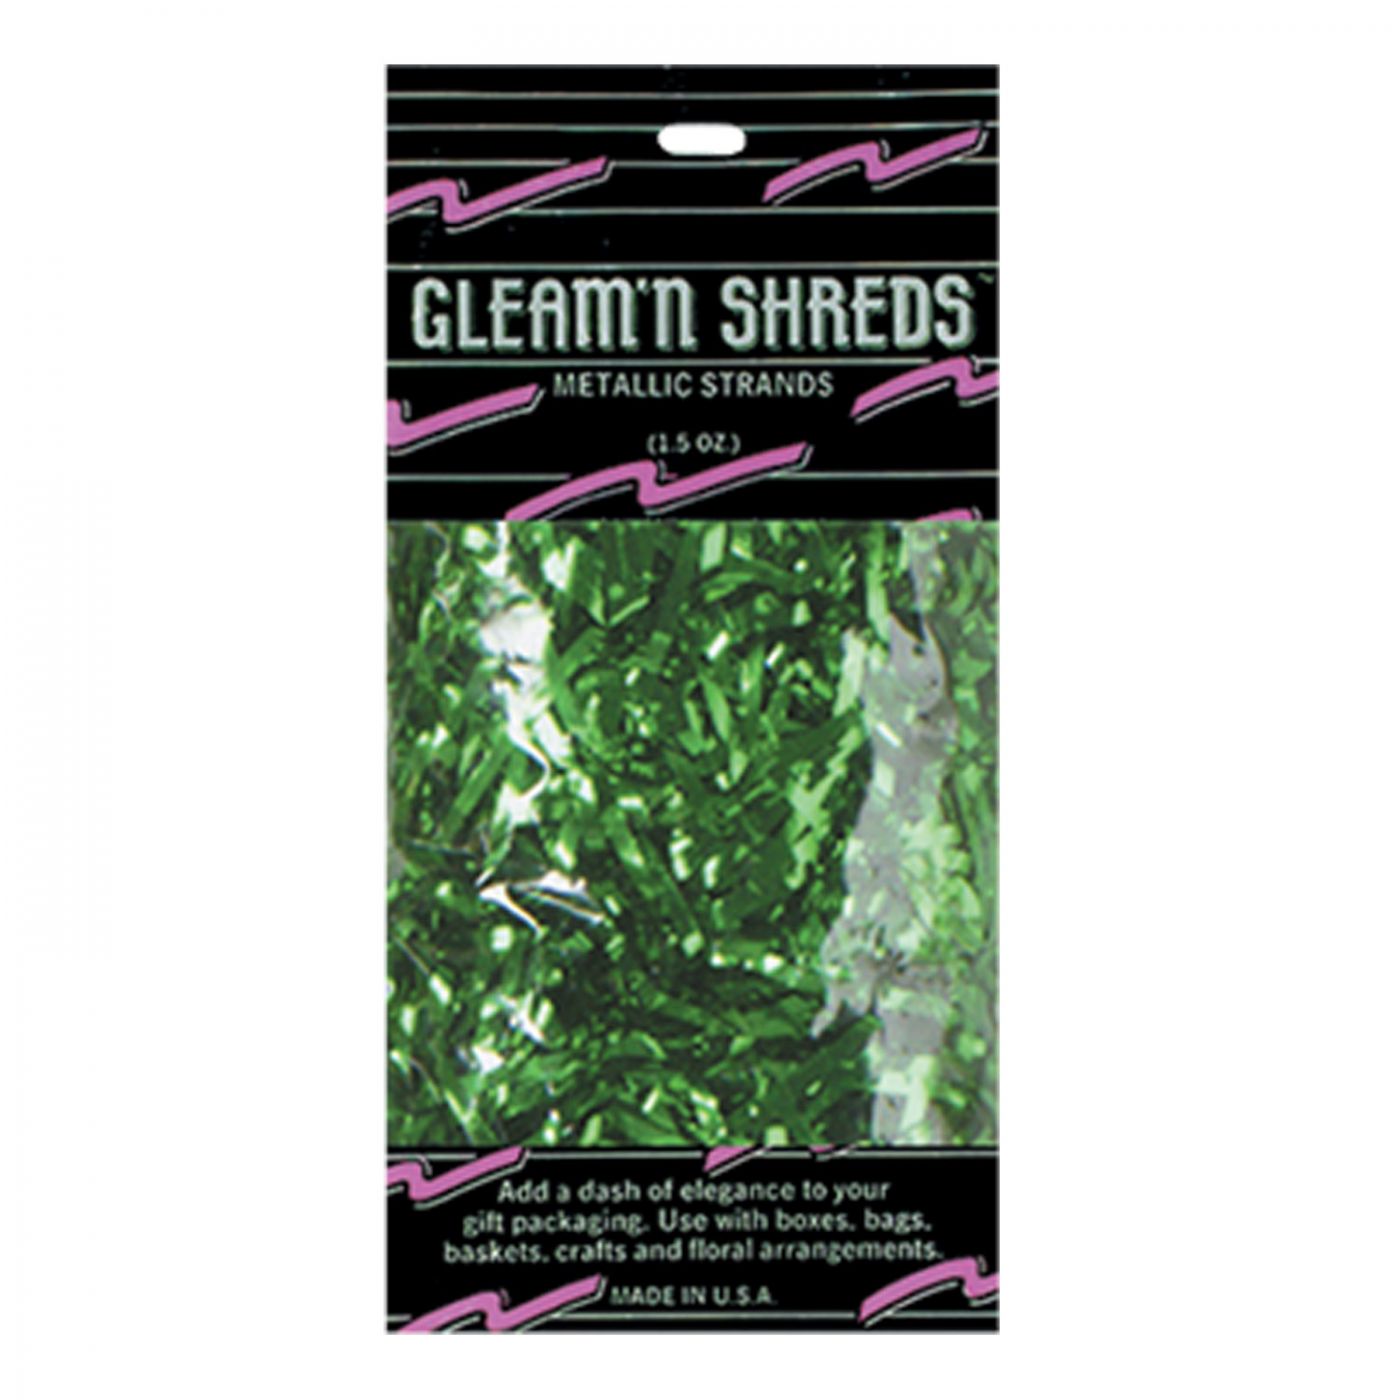 Gleam 'N Shreds Metallic Strands (12) image